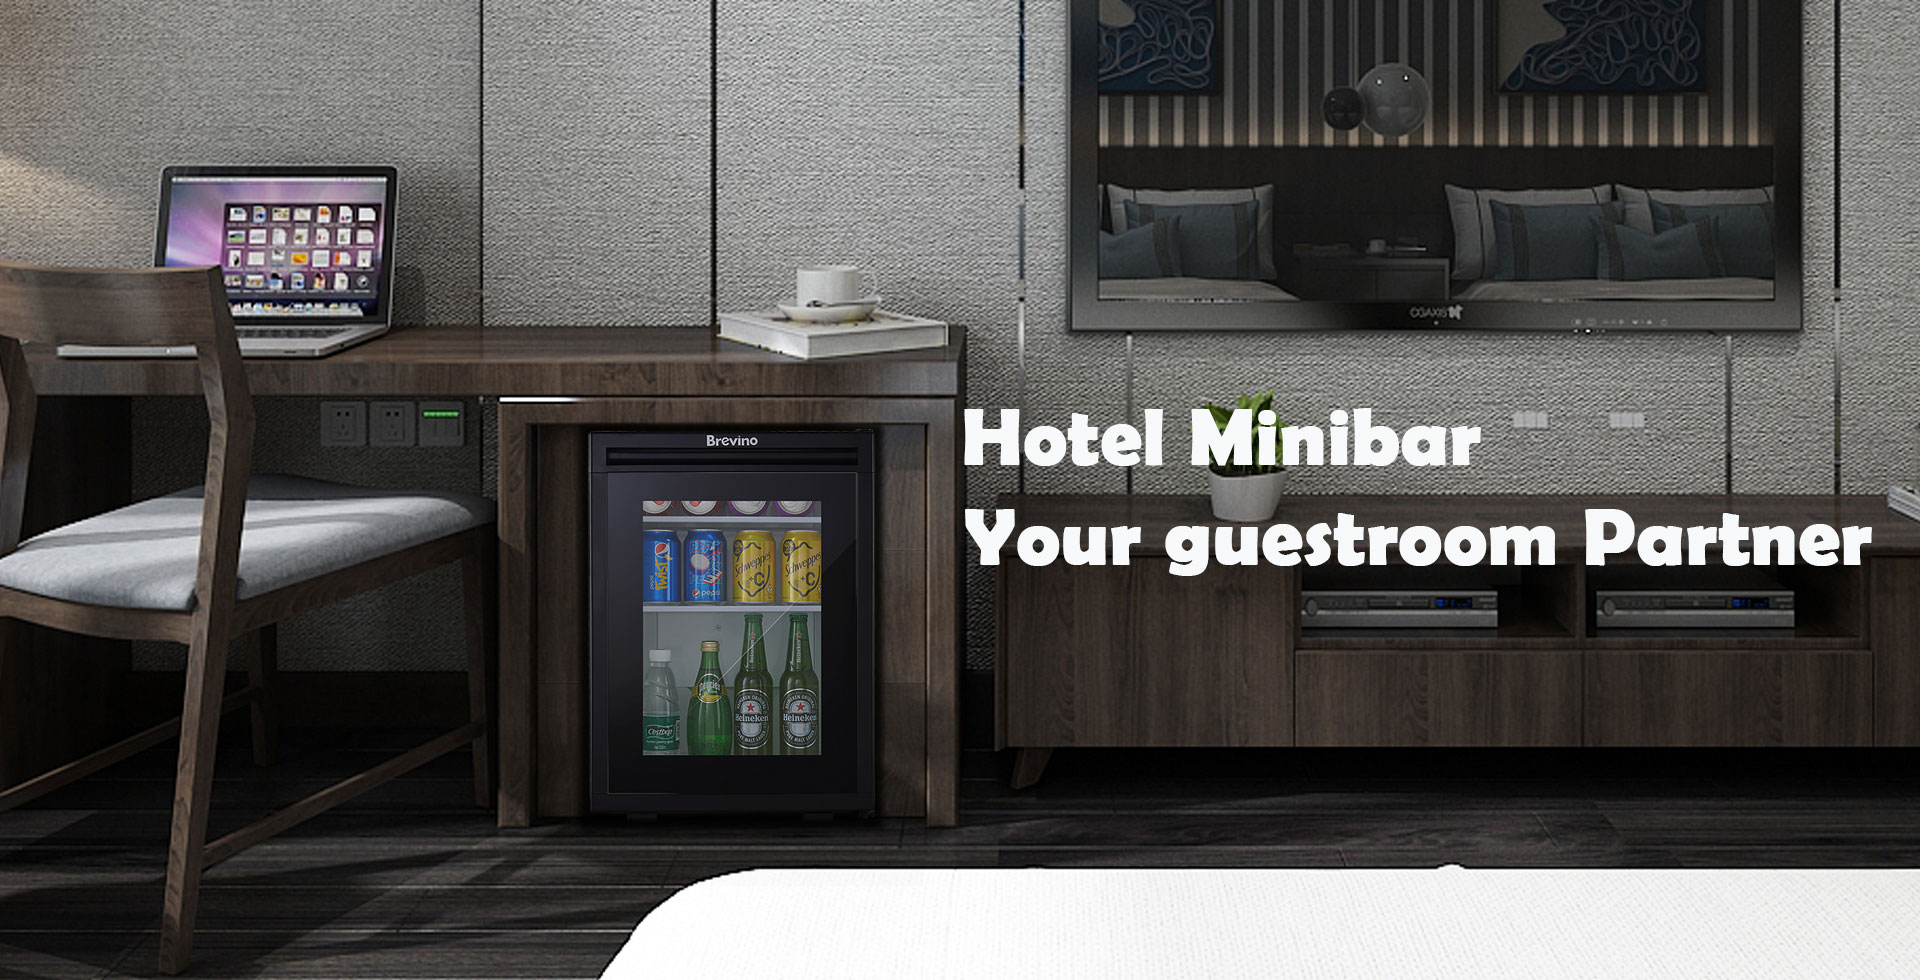 Hotel Minibar